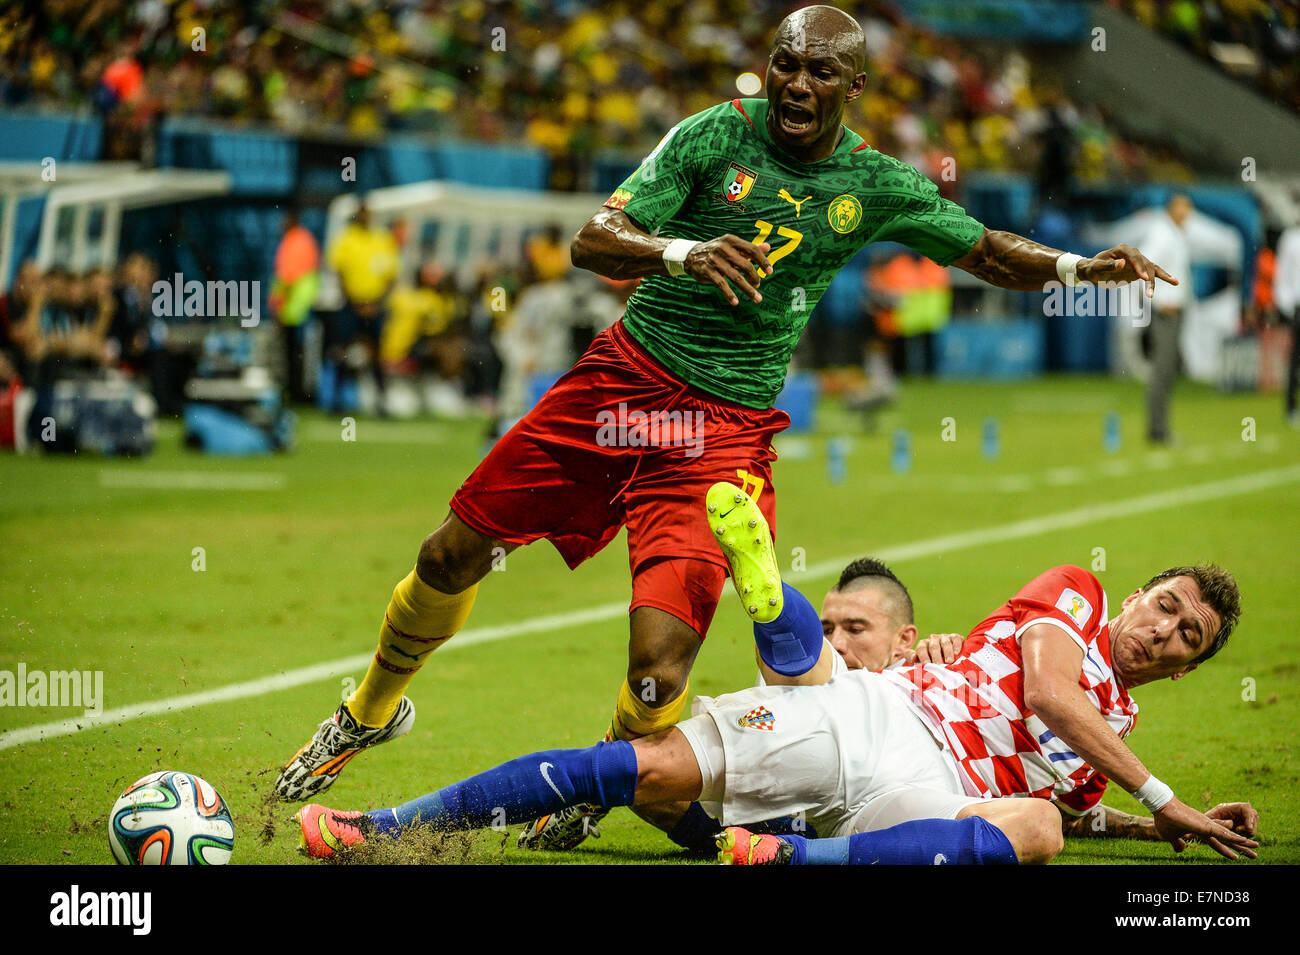 Stephane Mbia . Croatia v Cameroon. Group match. FIFA World Cup 2014 Brazil. Arena Amazonia, Manaus. 18 Jun 2014. Stock Photo